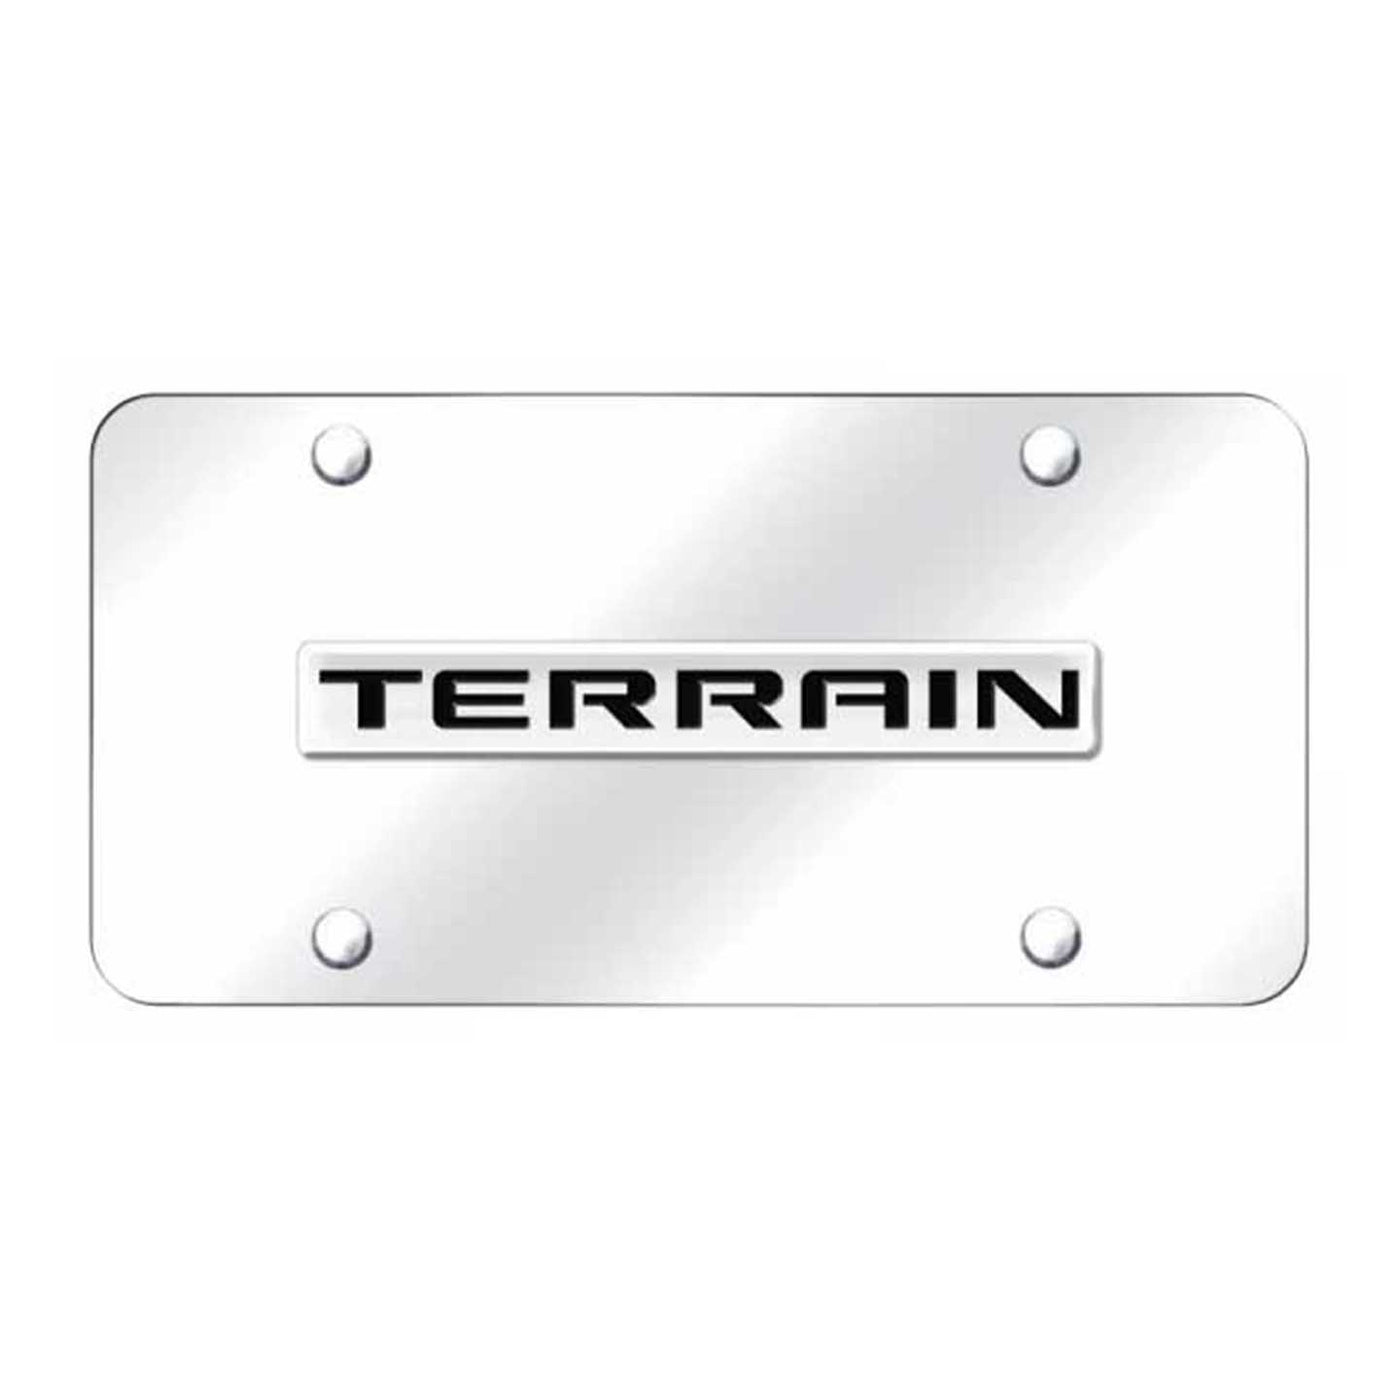 Terrain Name License Plate - Chrome on Mirrored